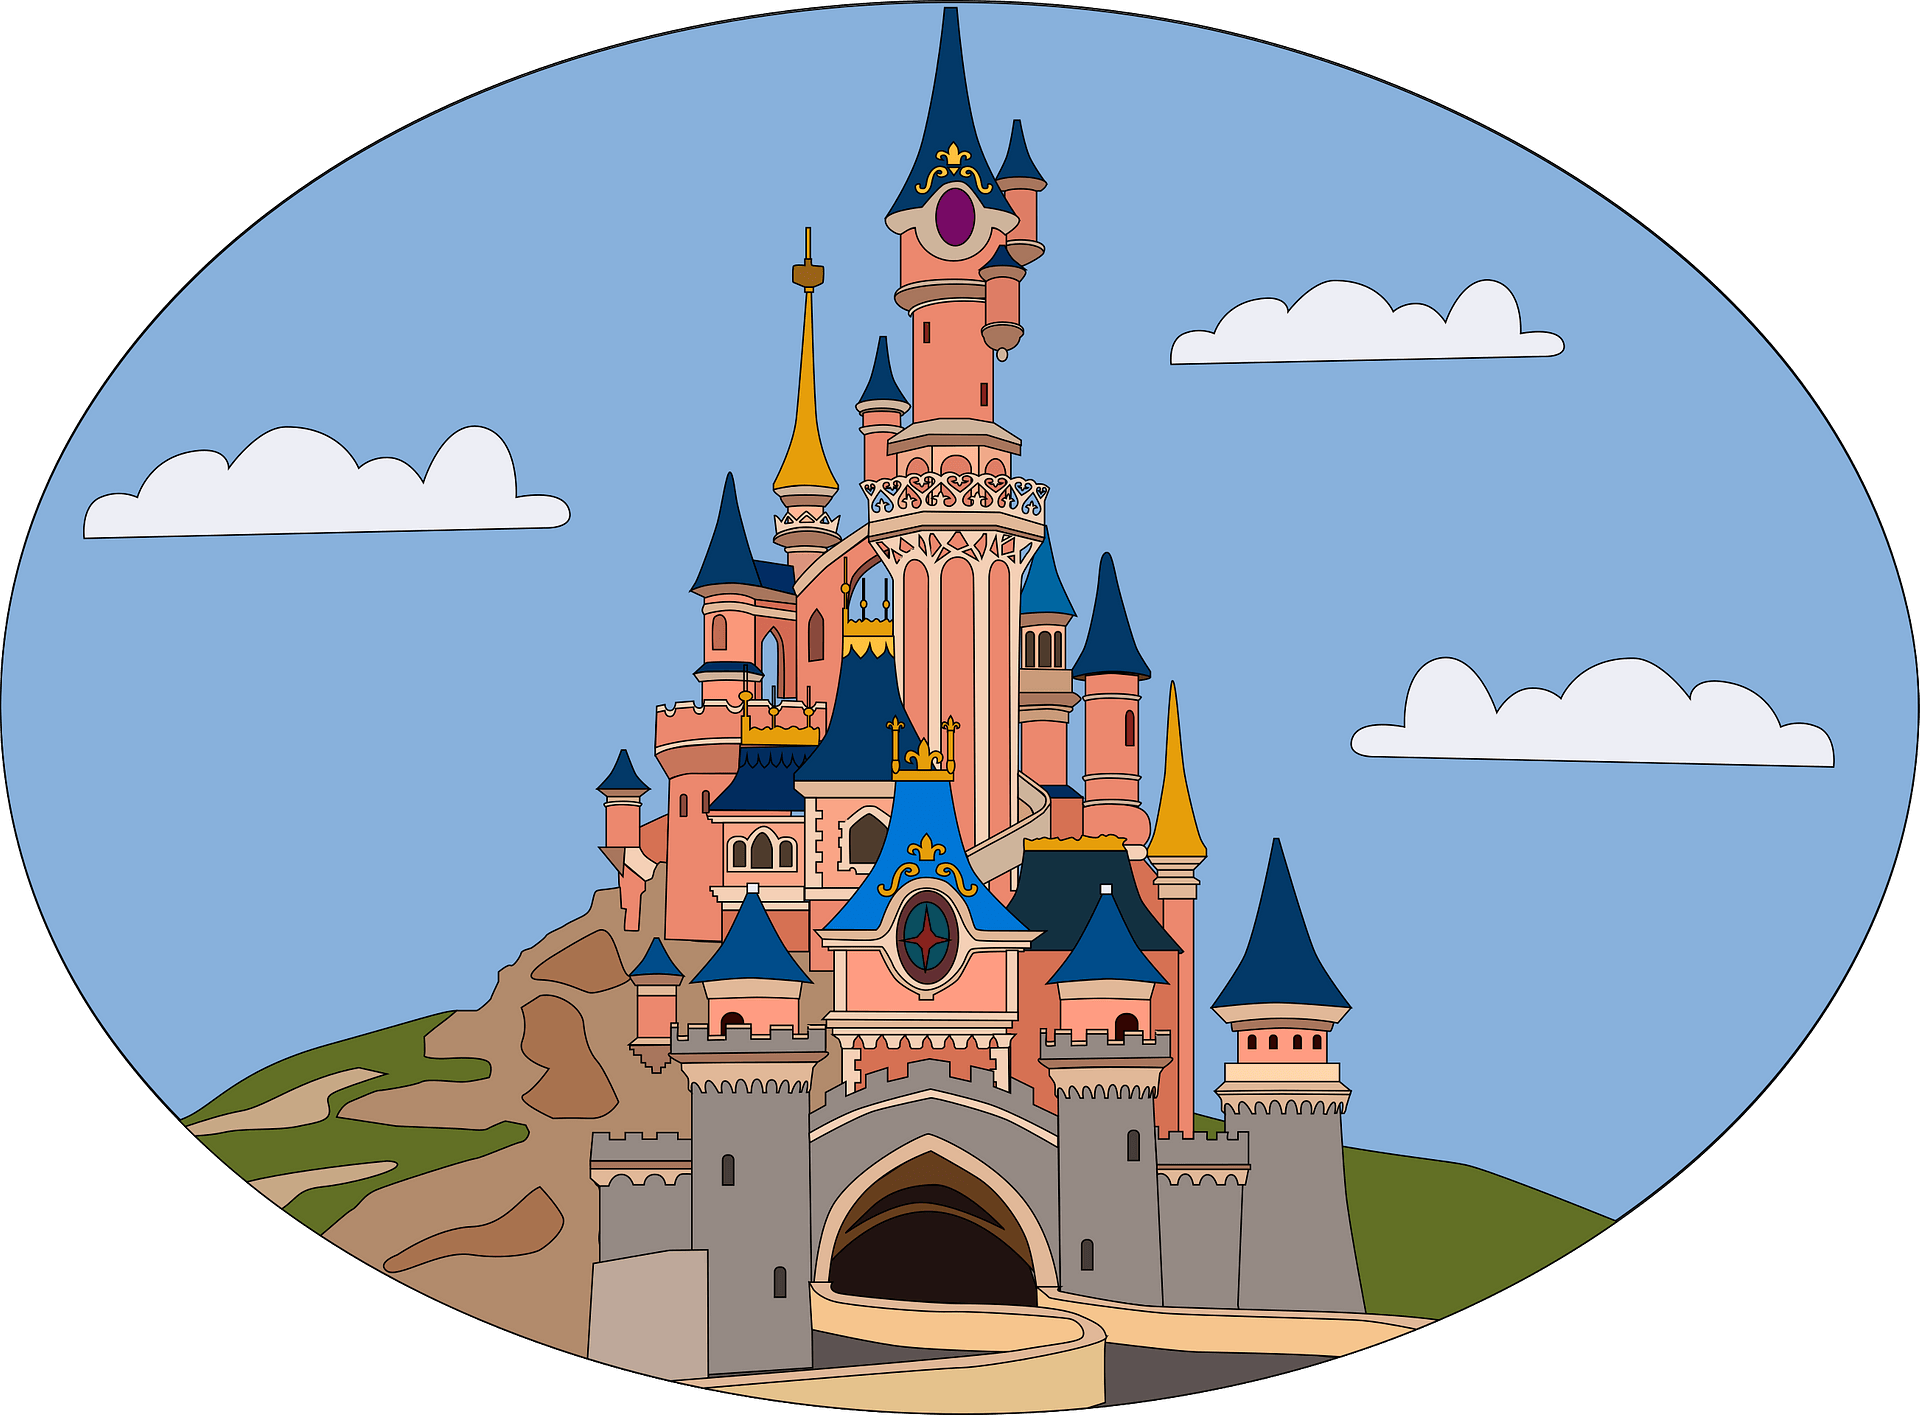 Disneyland castle PNG transparent image download, size: 1920x1415px